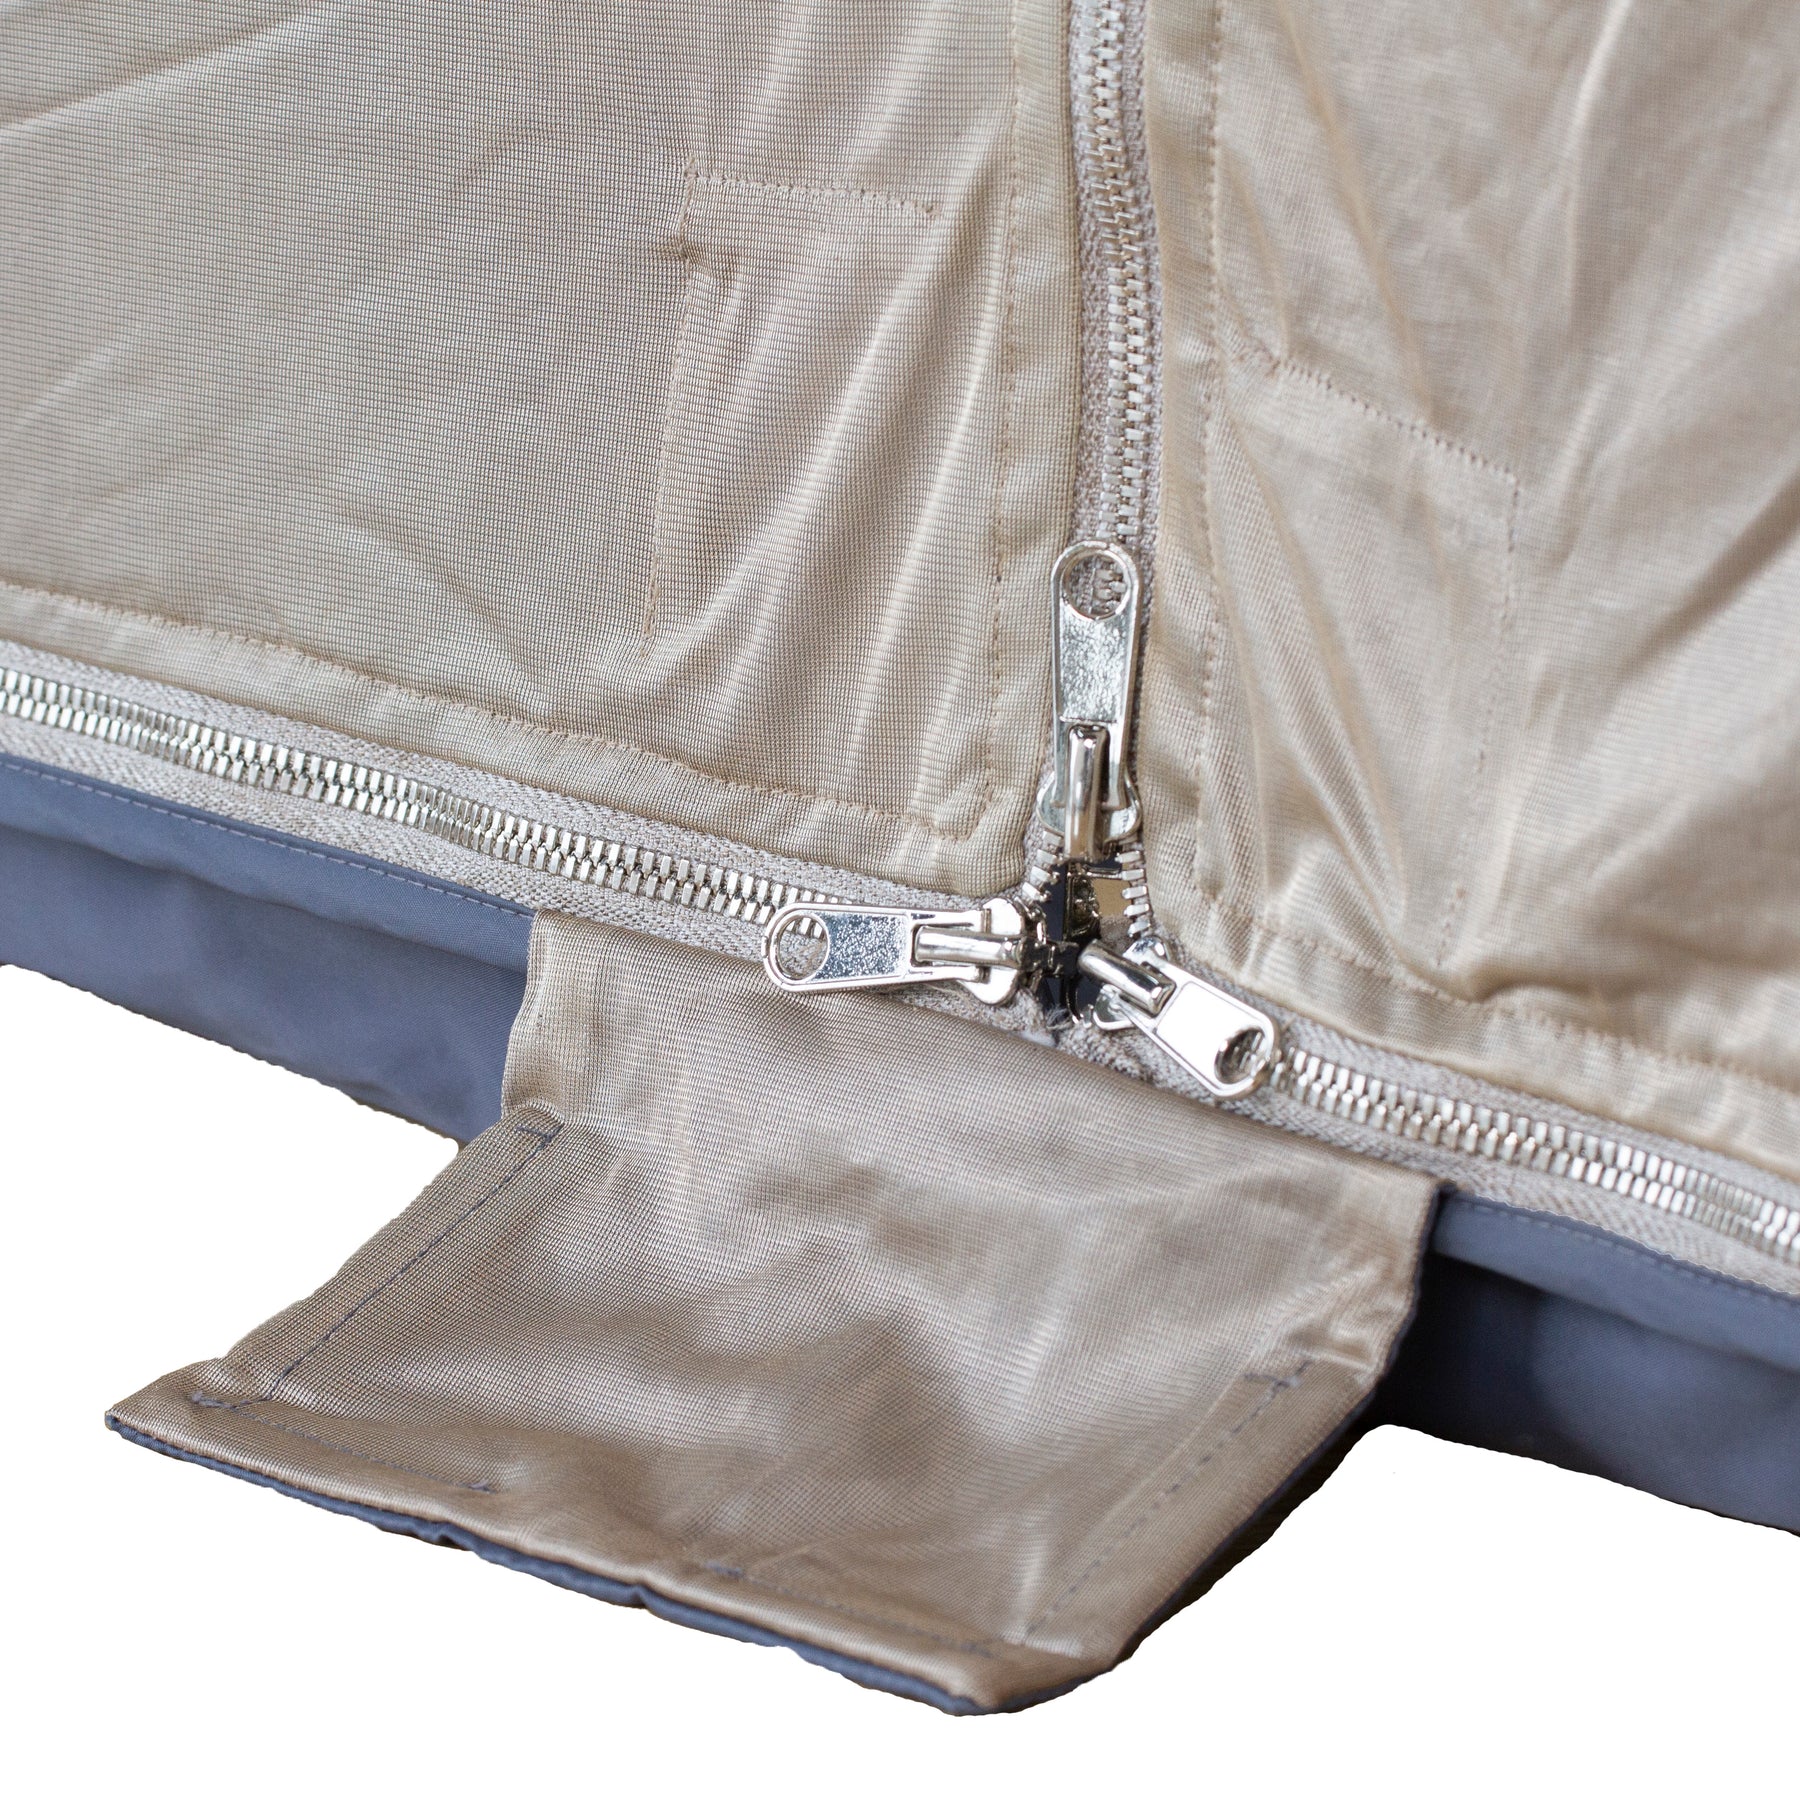 EMF Schutz apply faraday zipper to prevent potential leakage